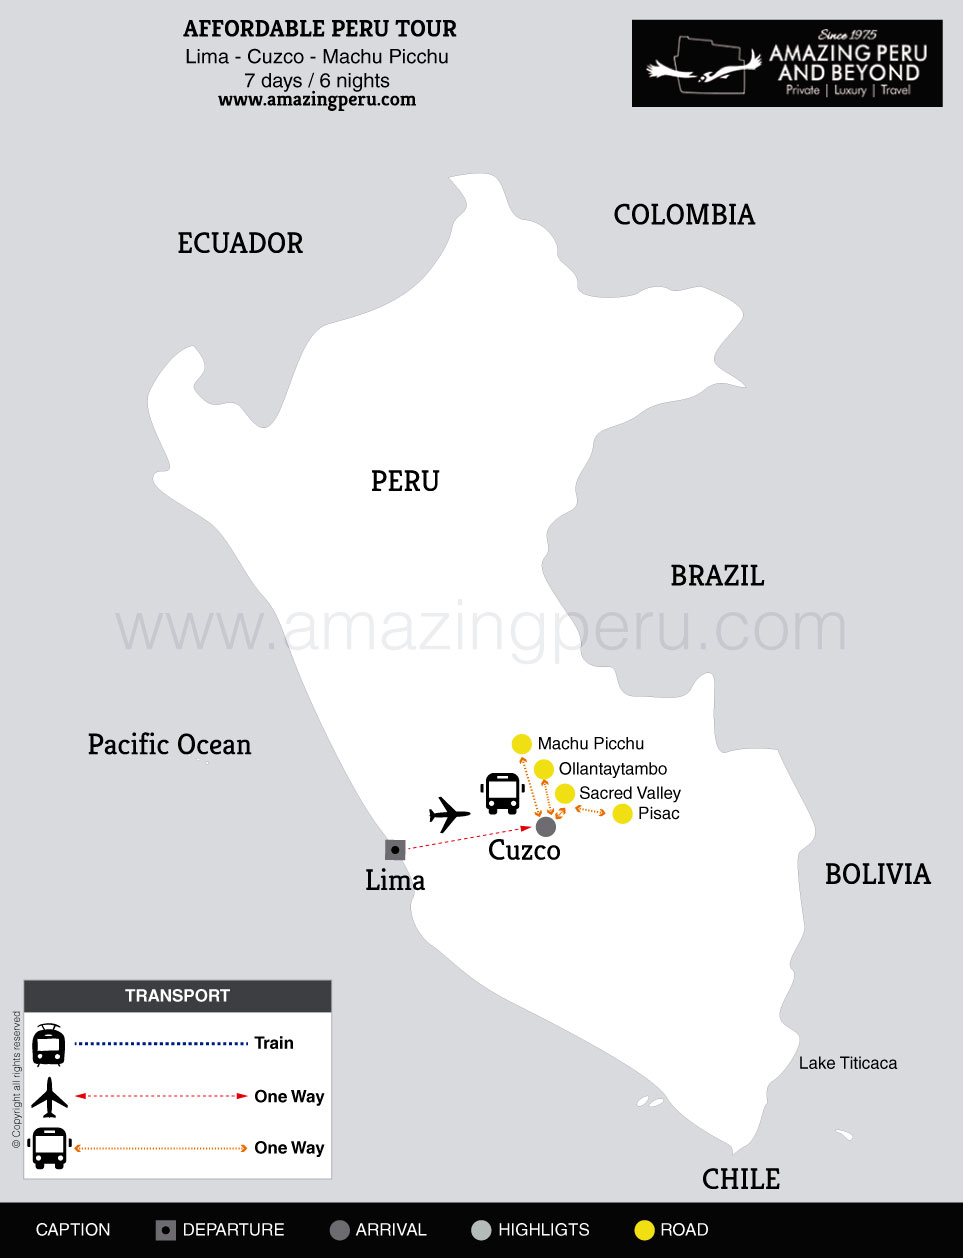 Affordable Peru Tour 2022 - 7 days / 6 nights.